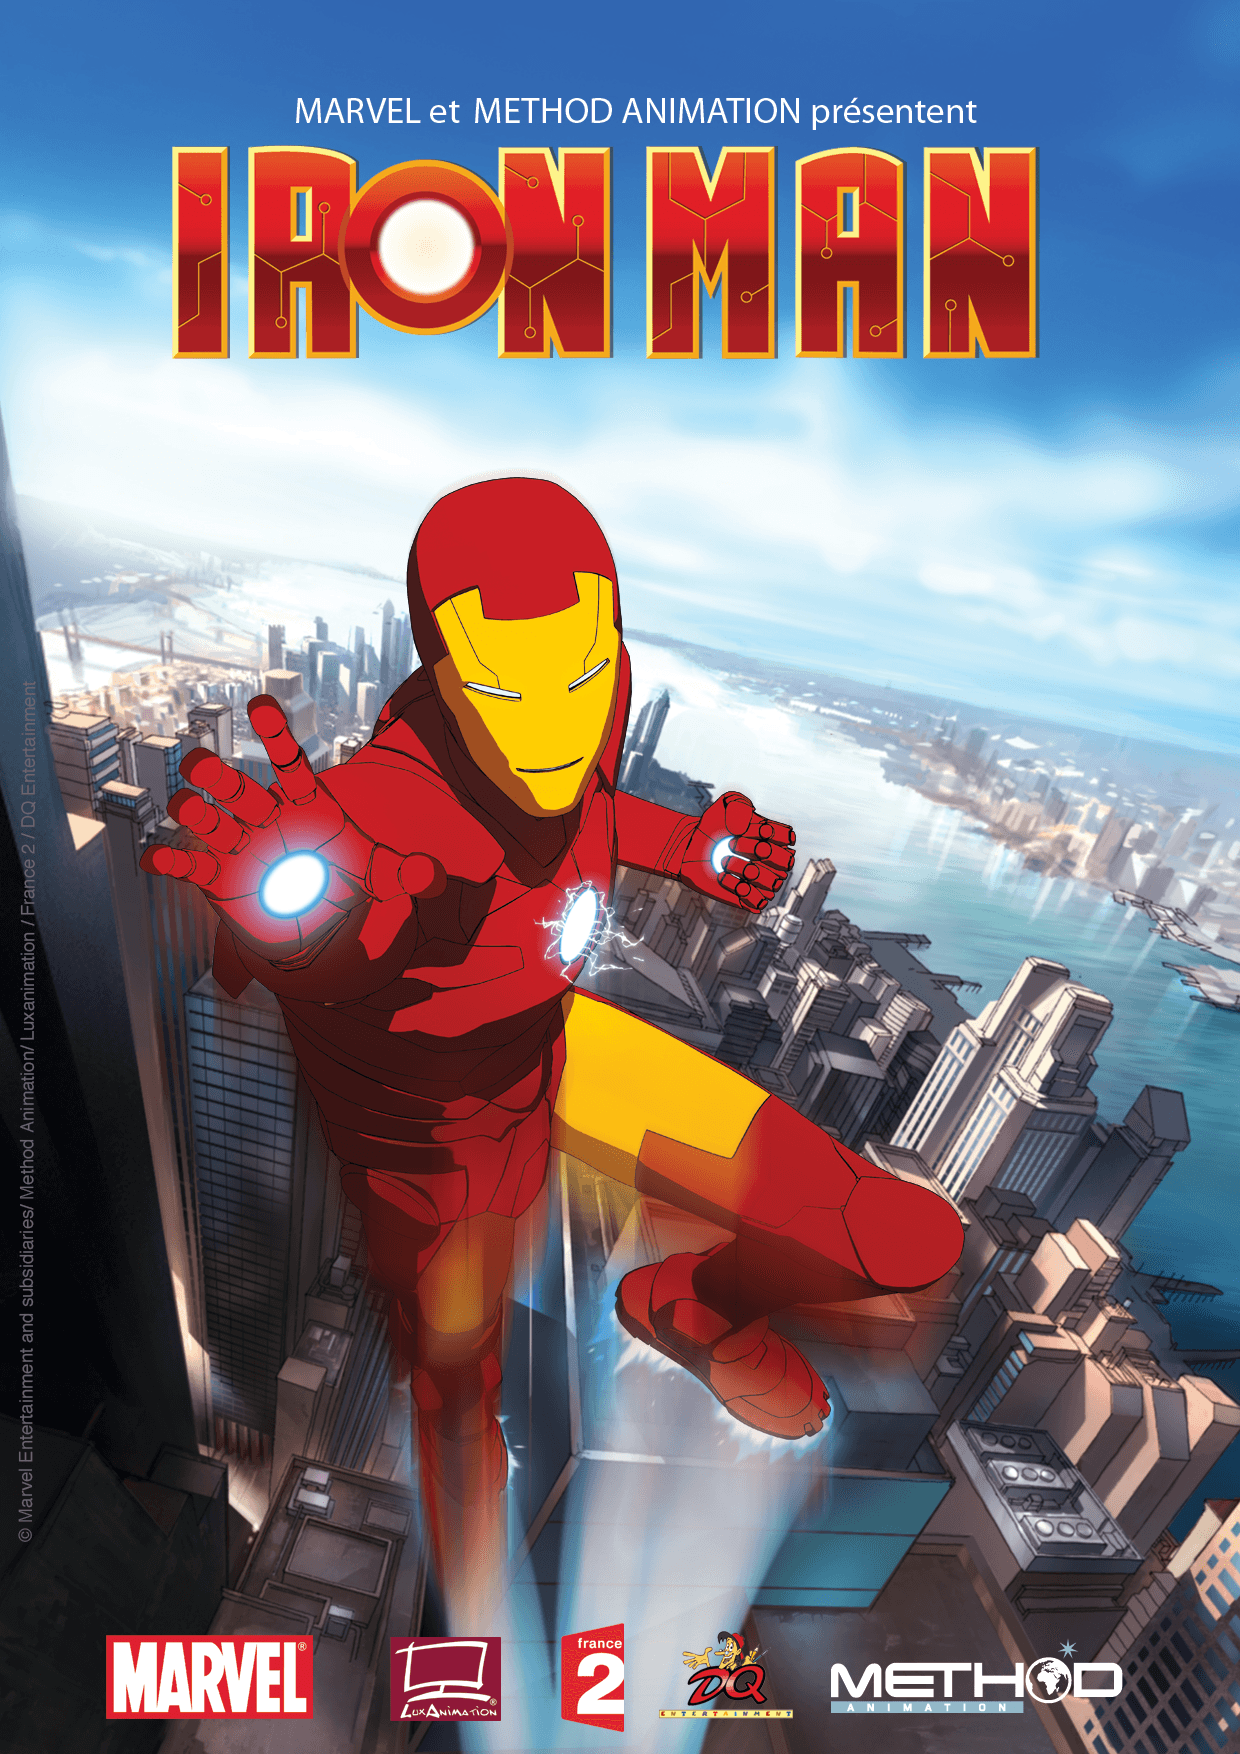 Iron-Man-visuel-de-reference-VF.png